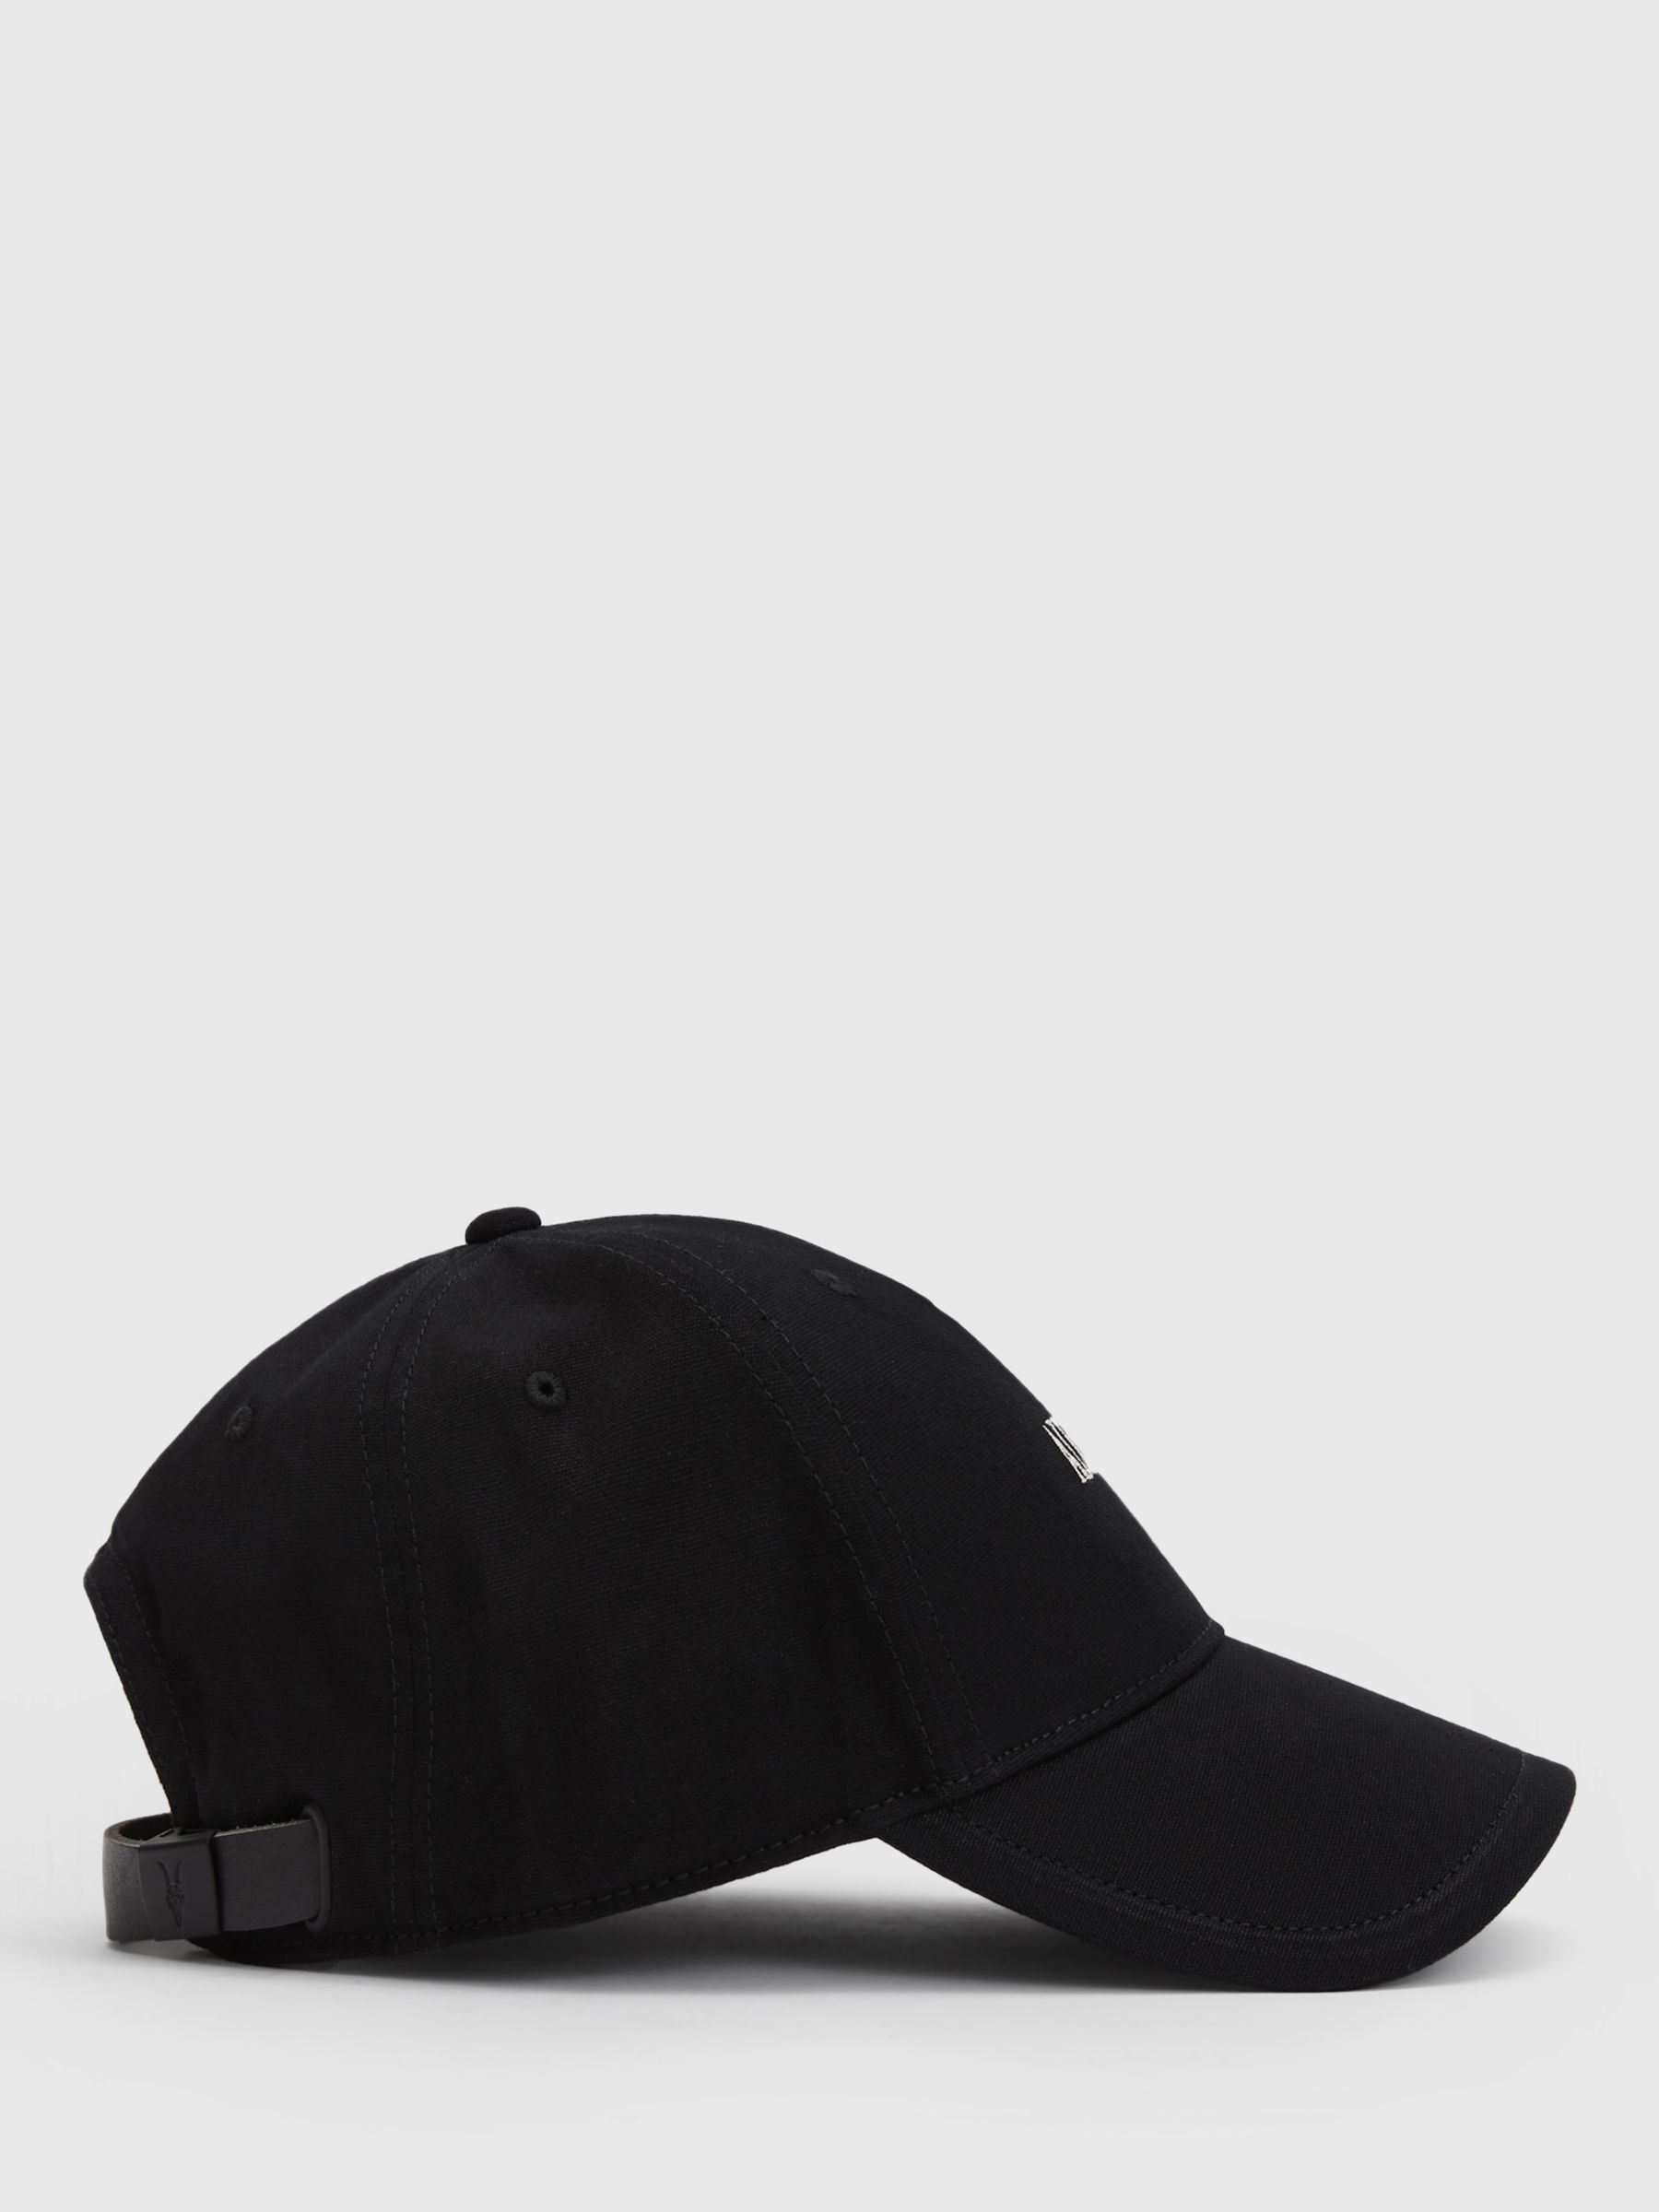 Buy AllSaints Axl Leather Strap Baseball Cap, Black/White Online at johnlewis.com